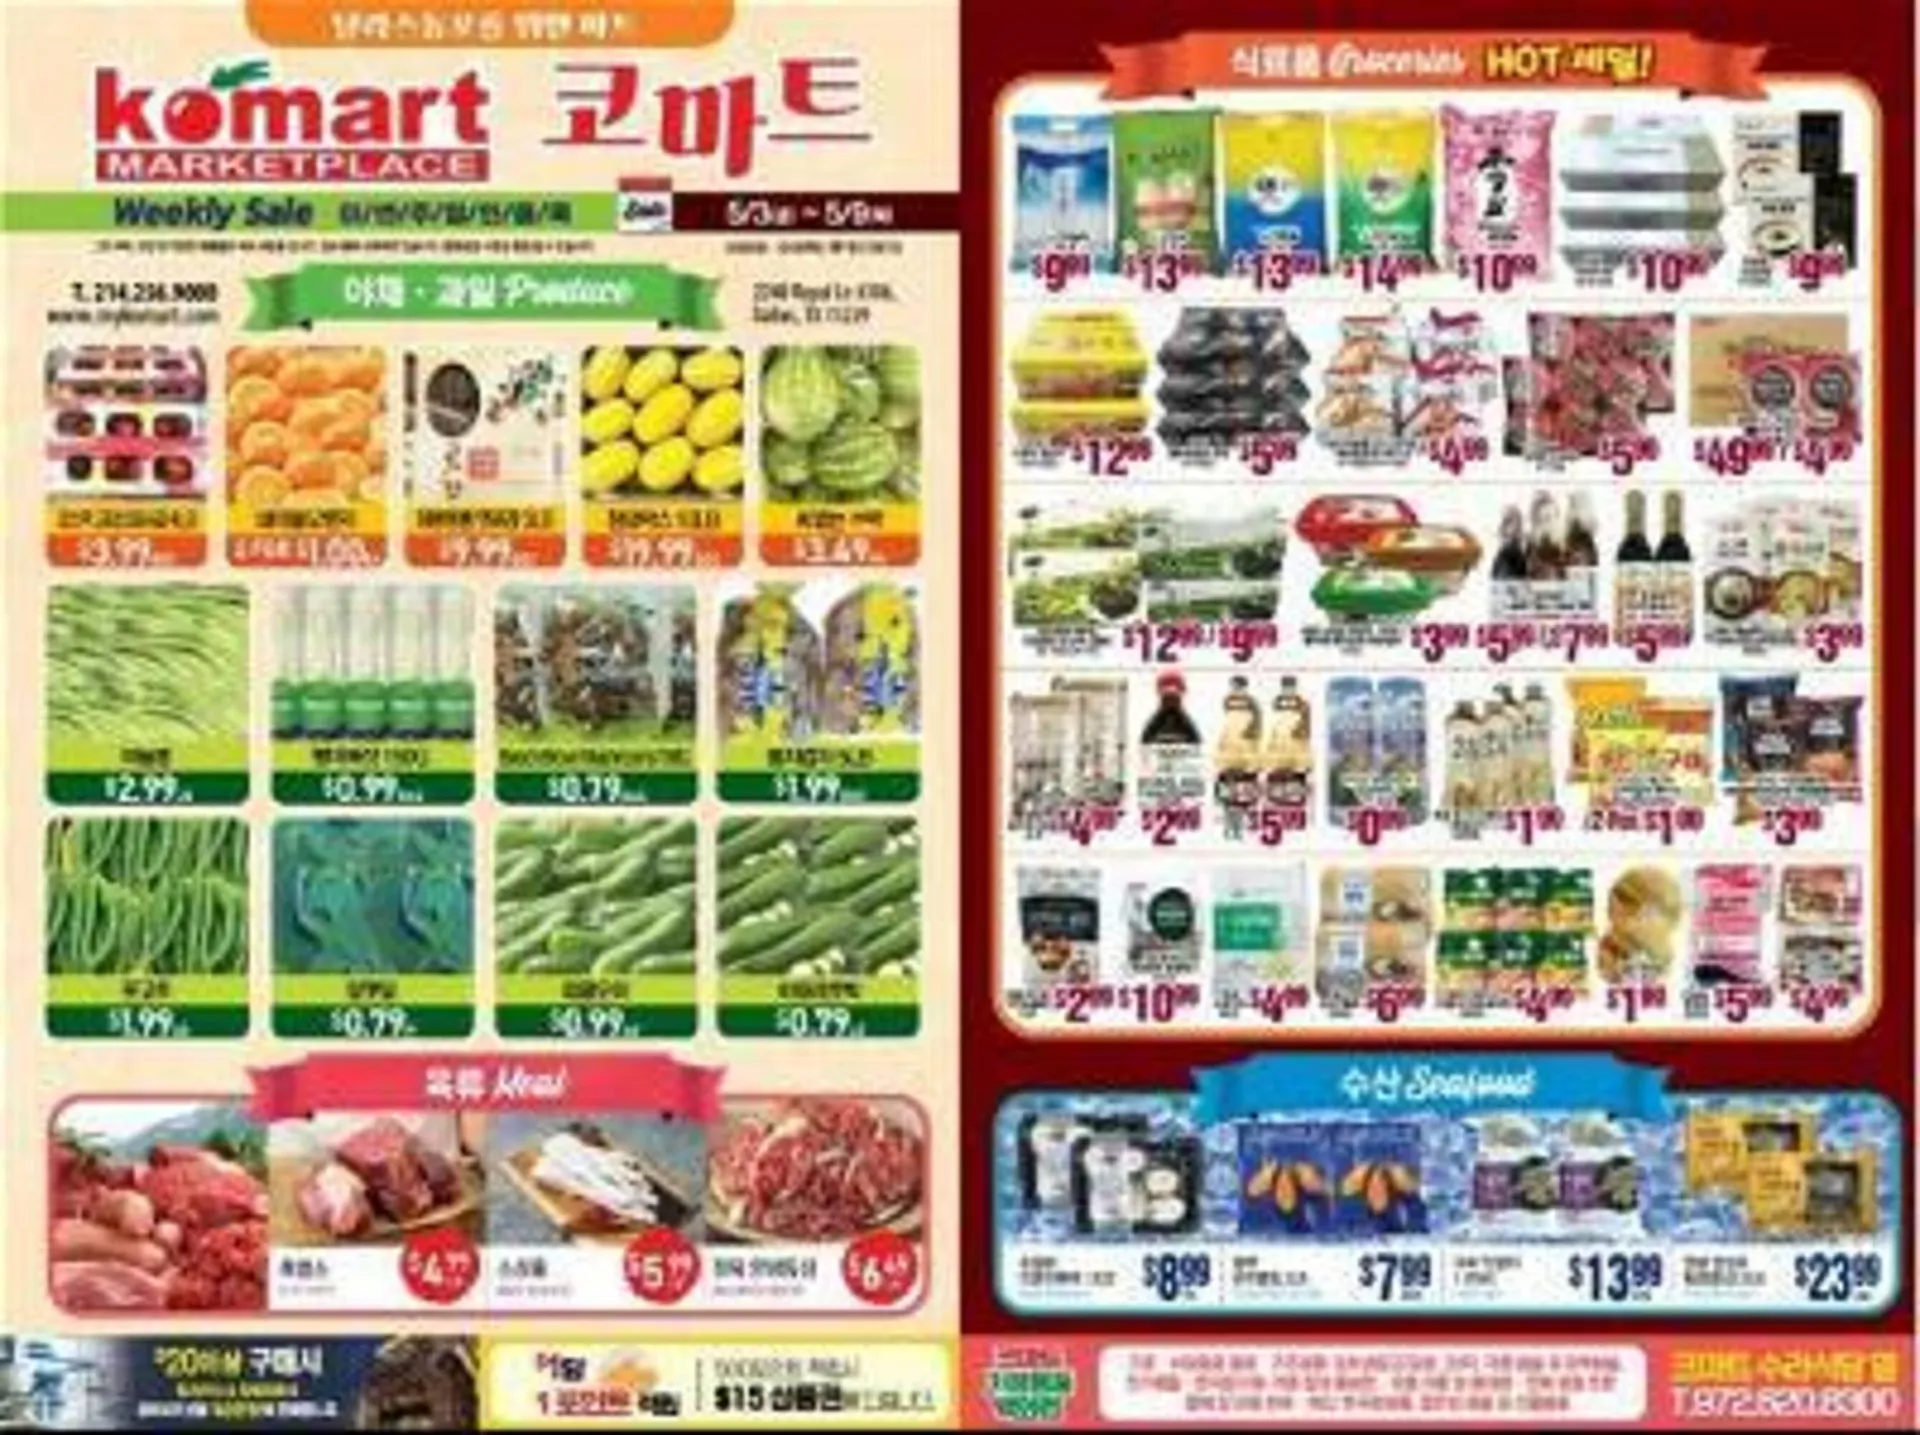 Komart Marketplace Weekly Ad - 1